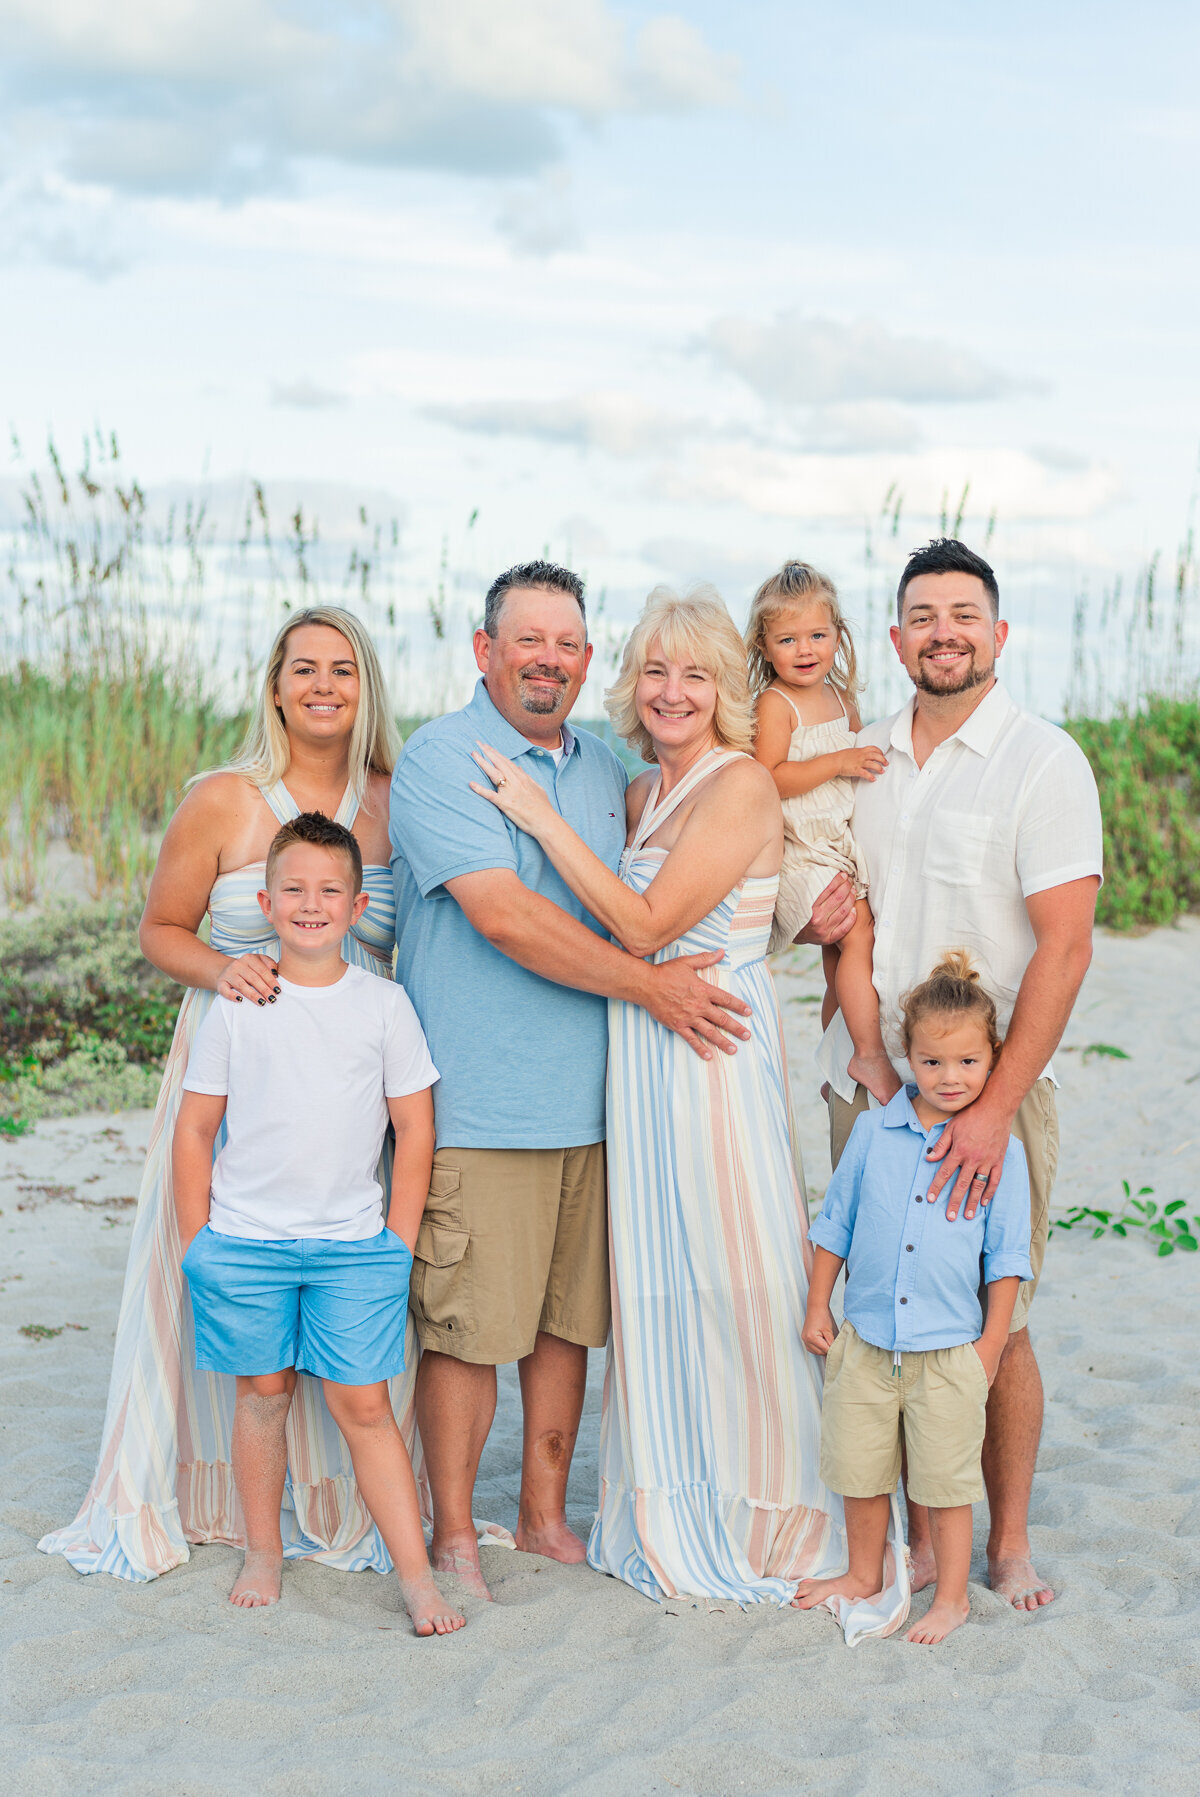 The R Family 2 Cocoa Beach Florida | Lisa Marshall Photography